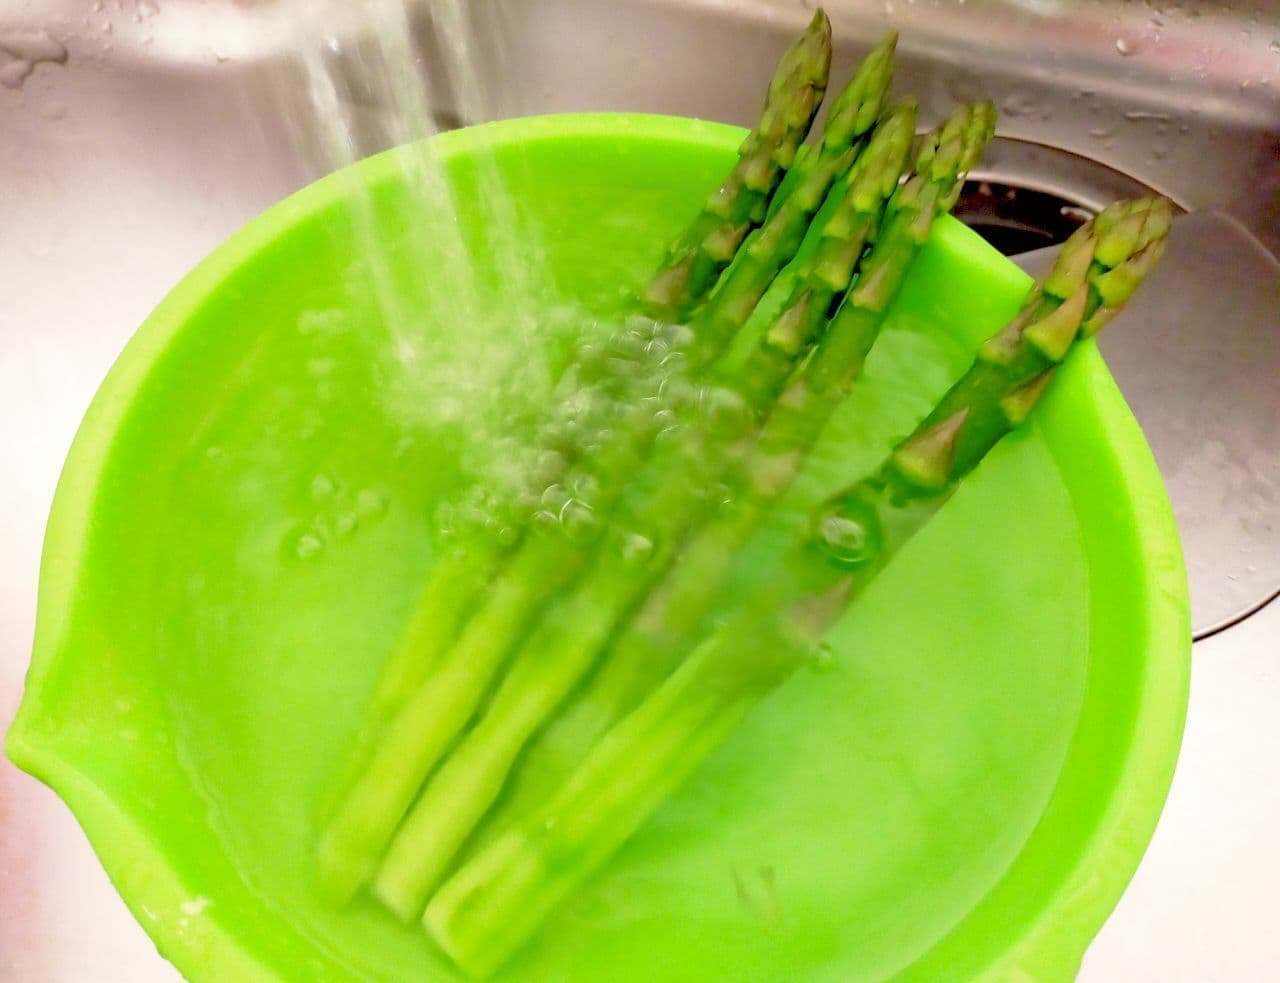 Step 3: Boil the asparagus